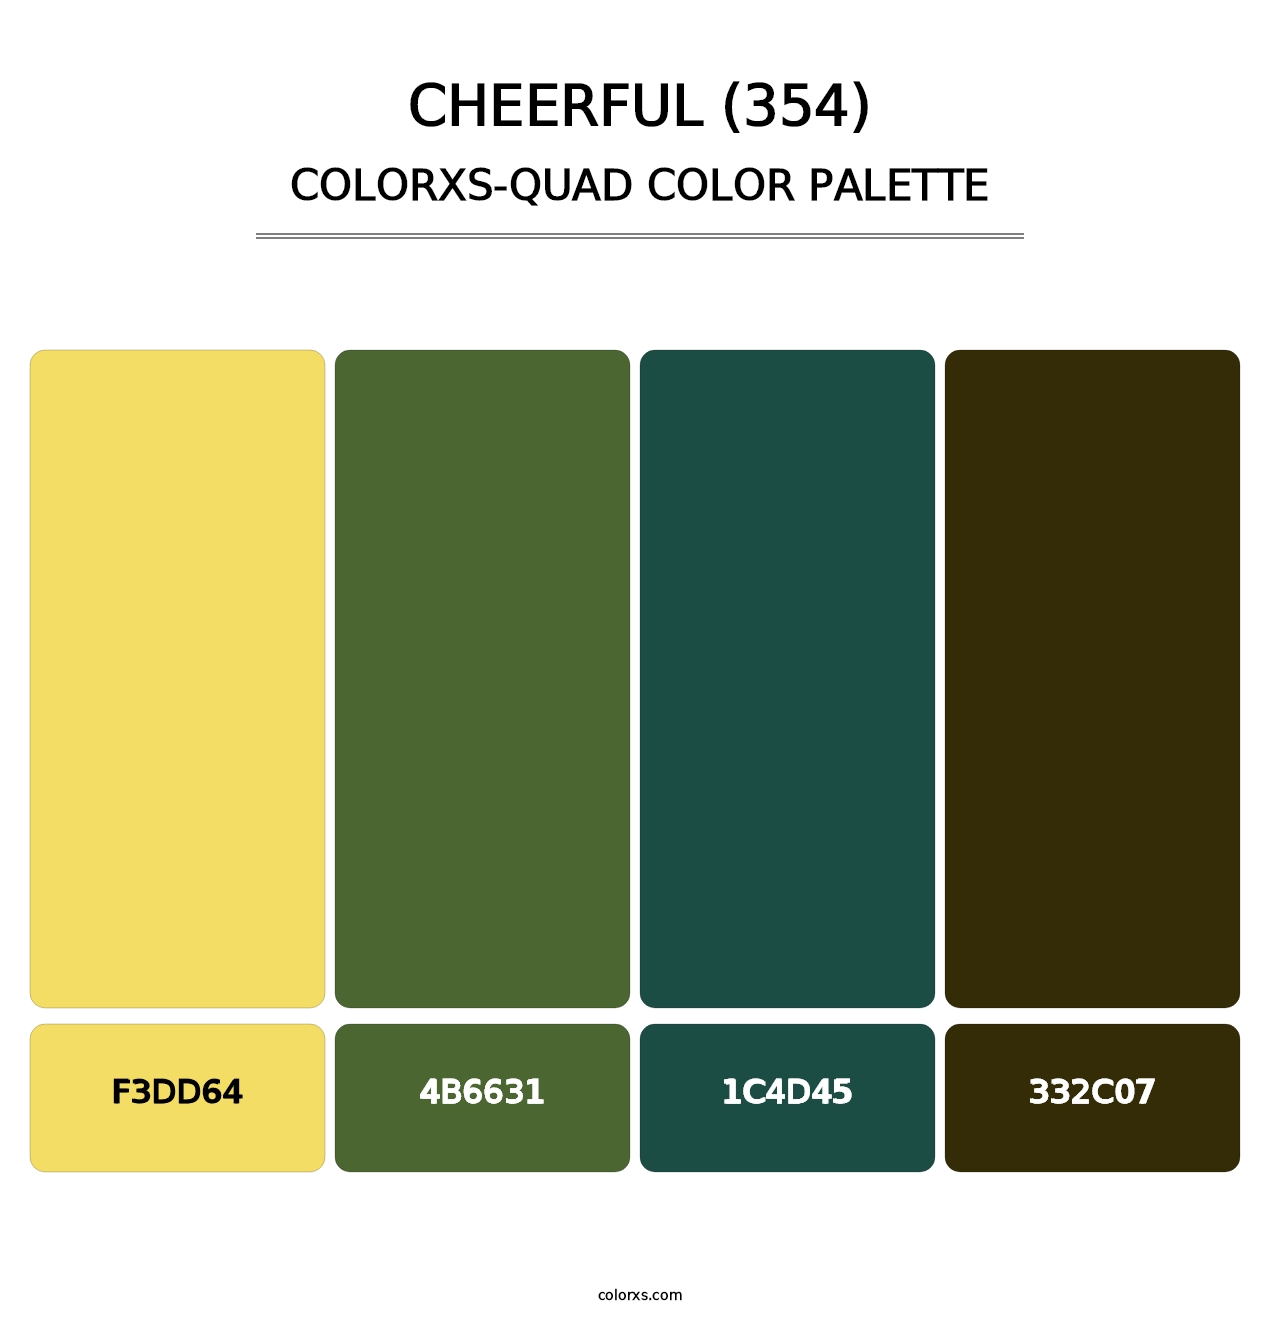 Cheerful (354) - Colorxs Quad Palette